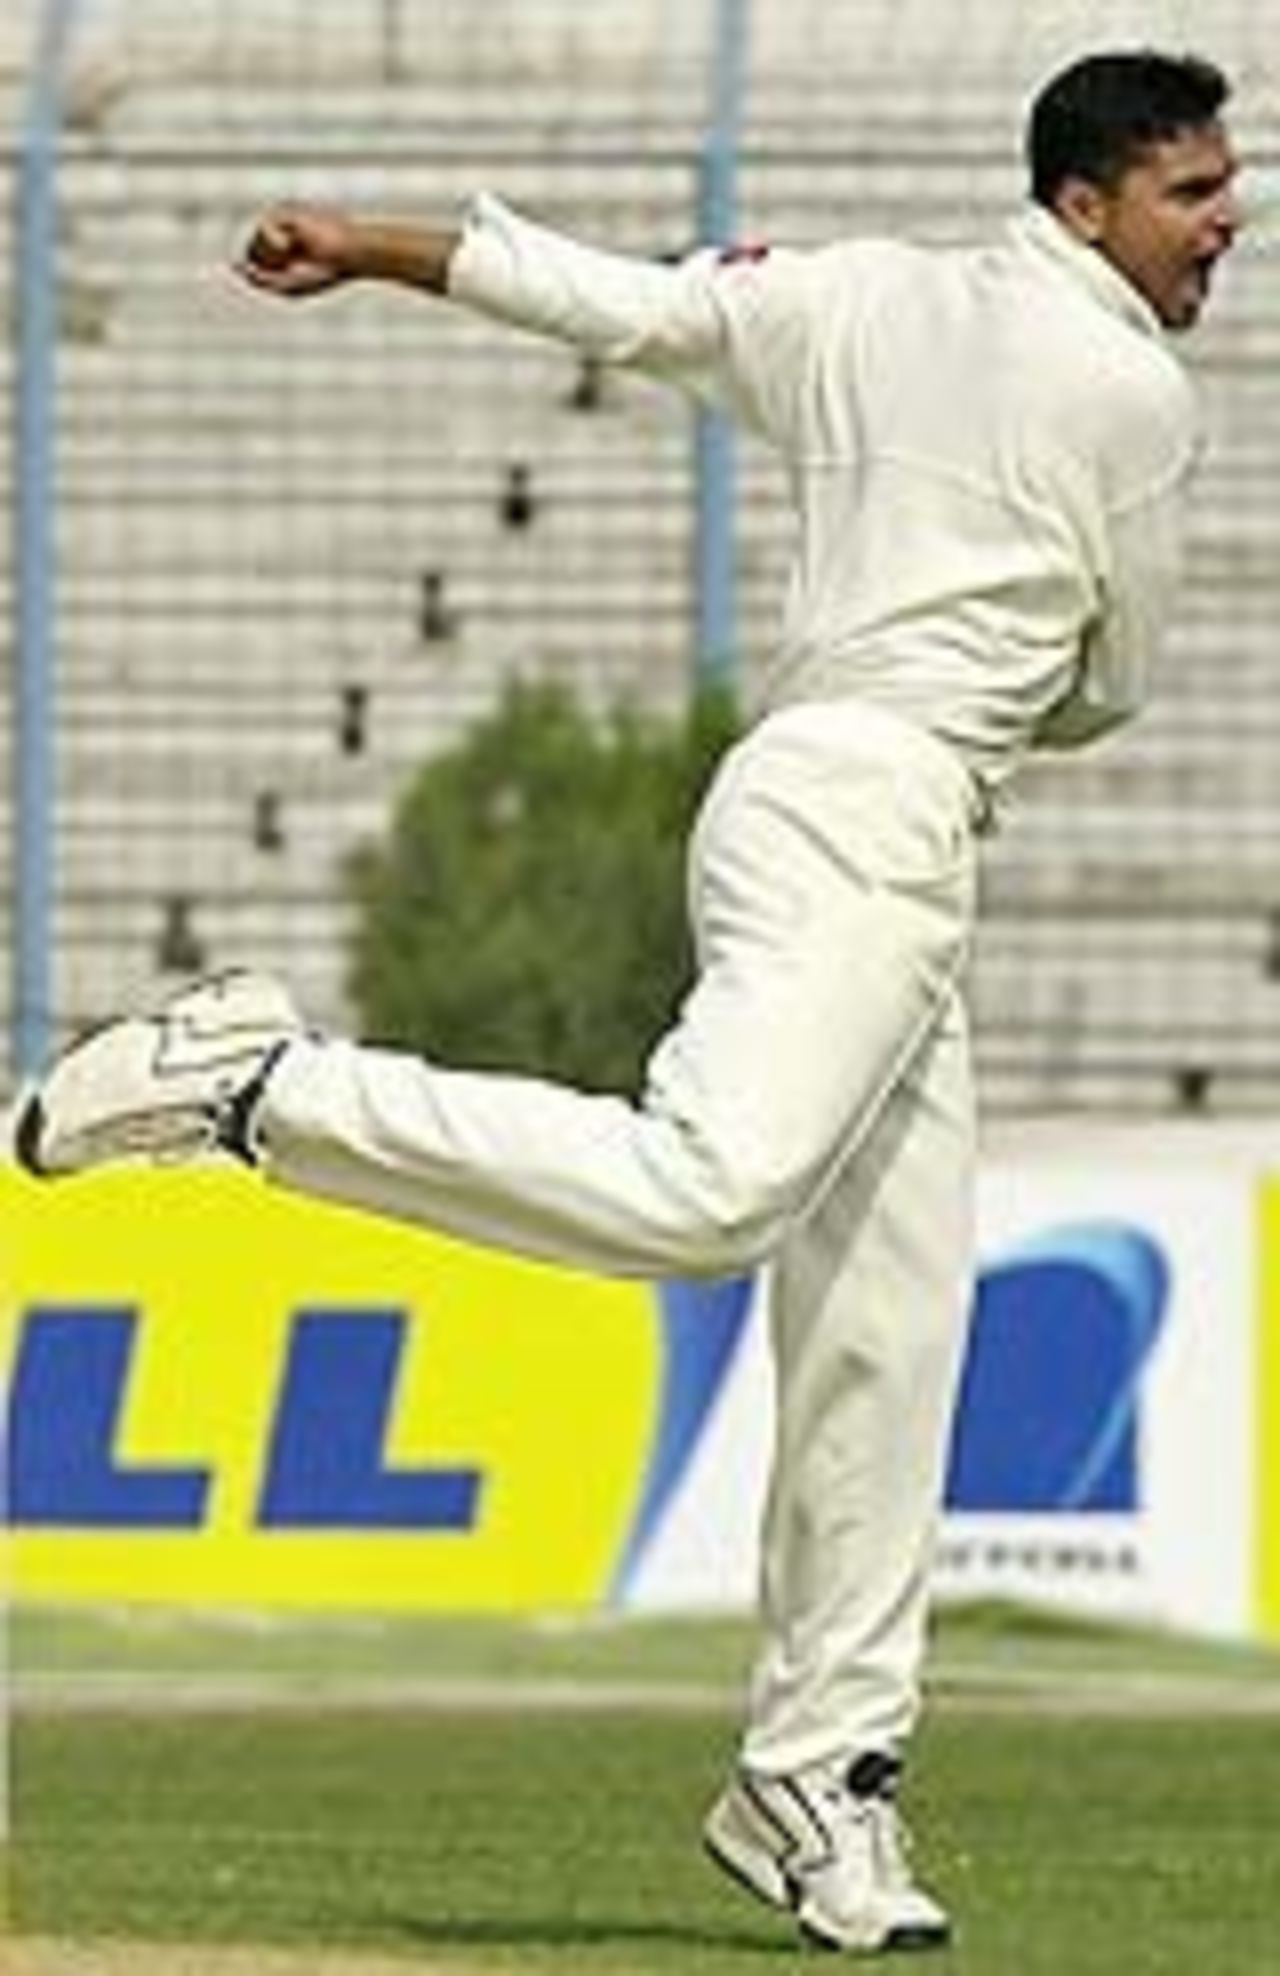 Mashrafe Mortaza celebrates after one of his wickets, Bangladesh v Zimbabwe, 1st Test, Chittagong, 3rd day, January 8, 2005